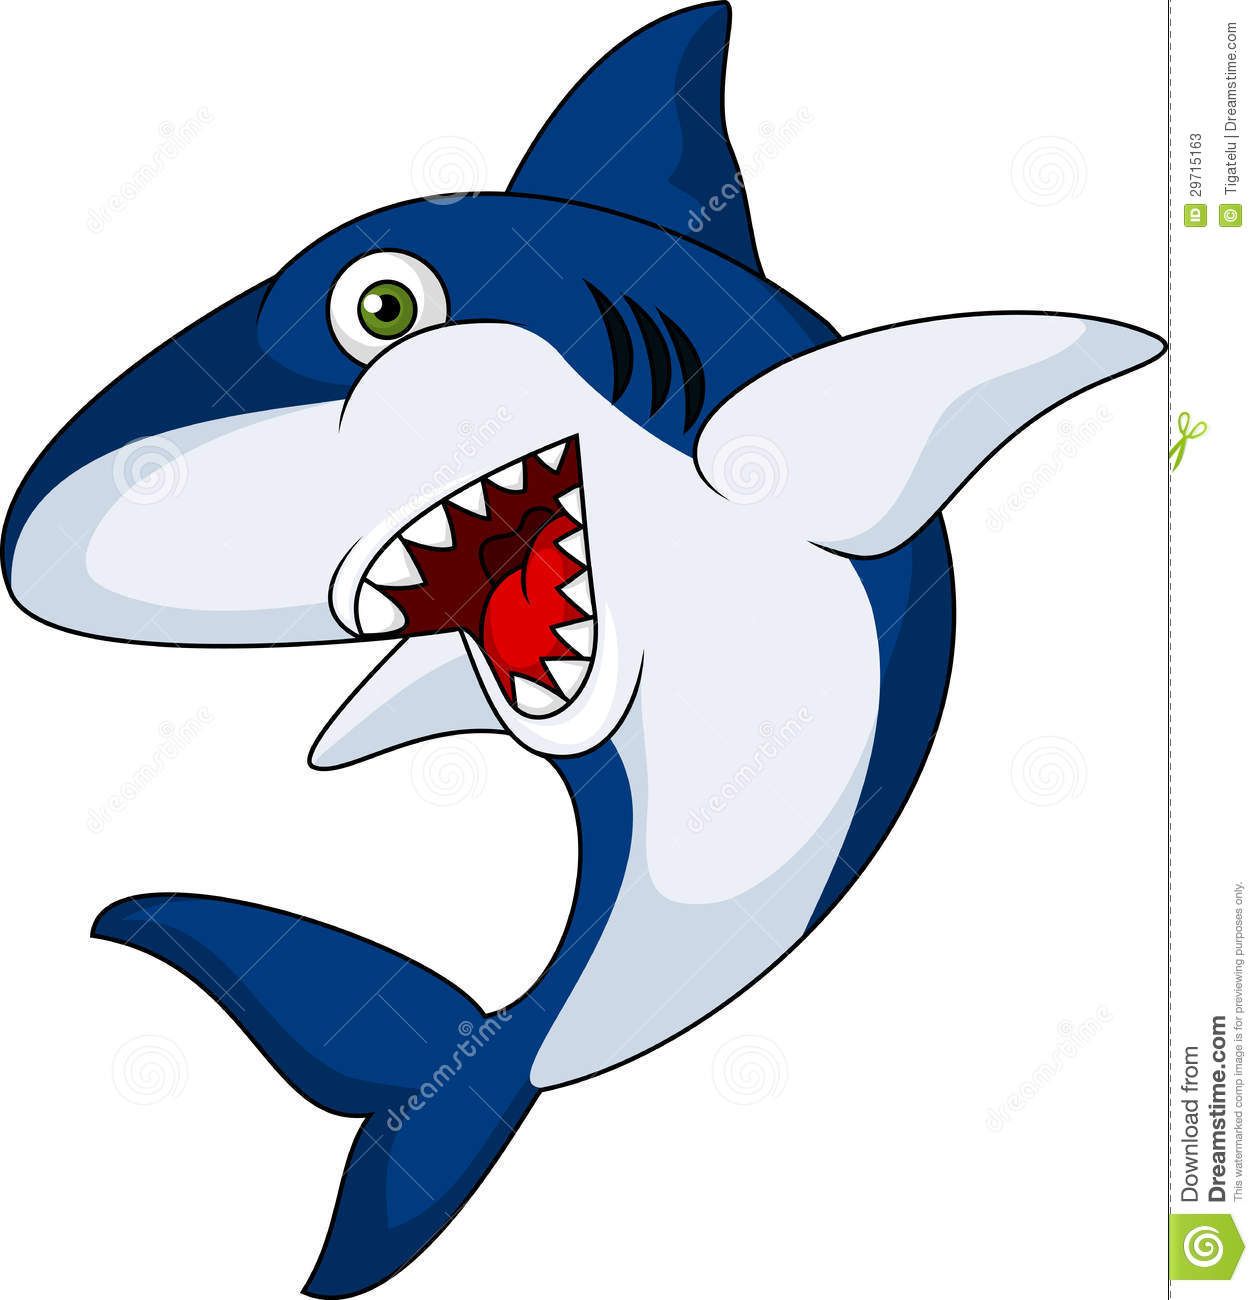 Cartoon shark images